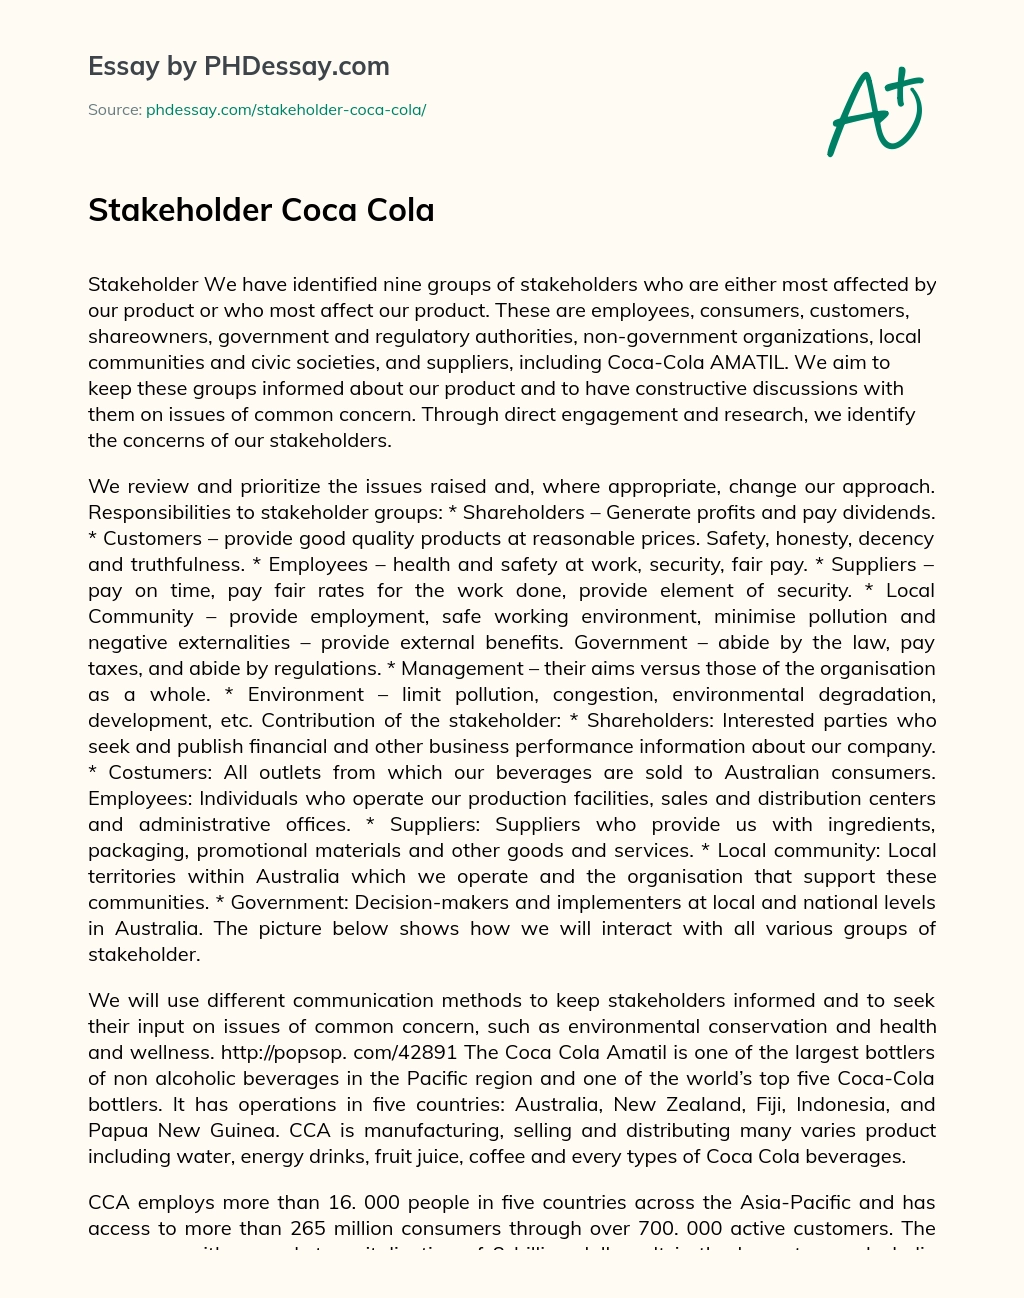 Stakeholder Coca Cola essay